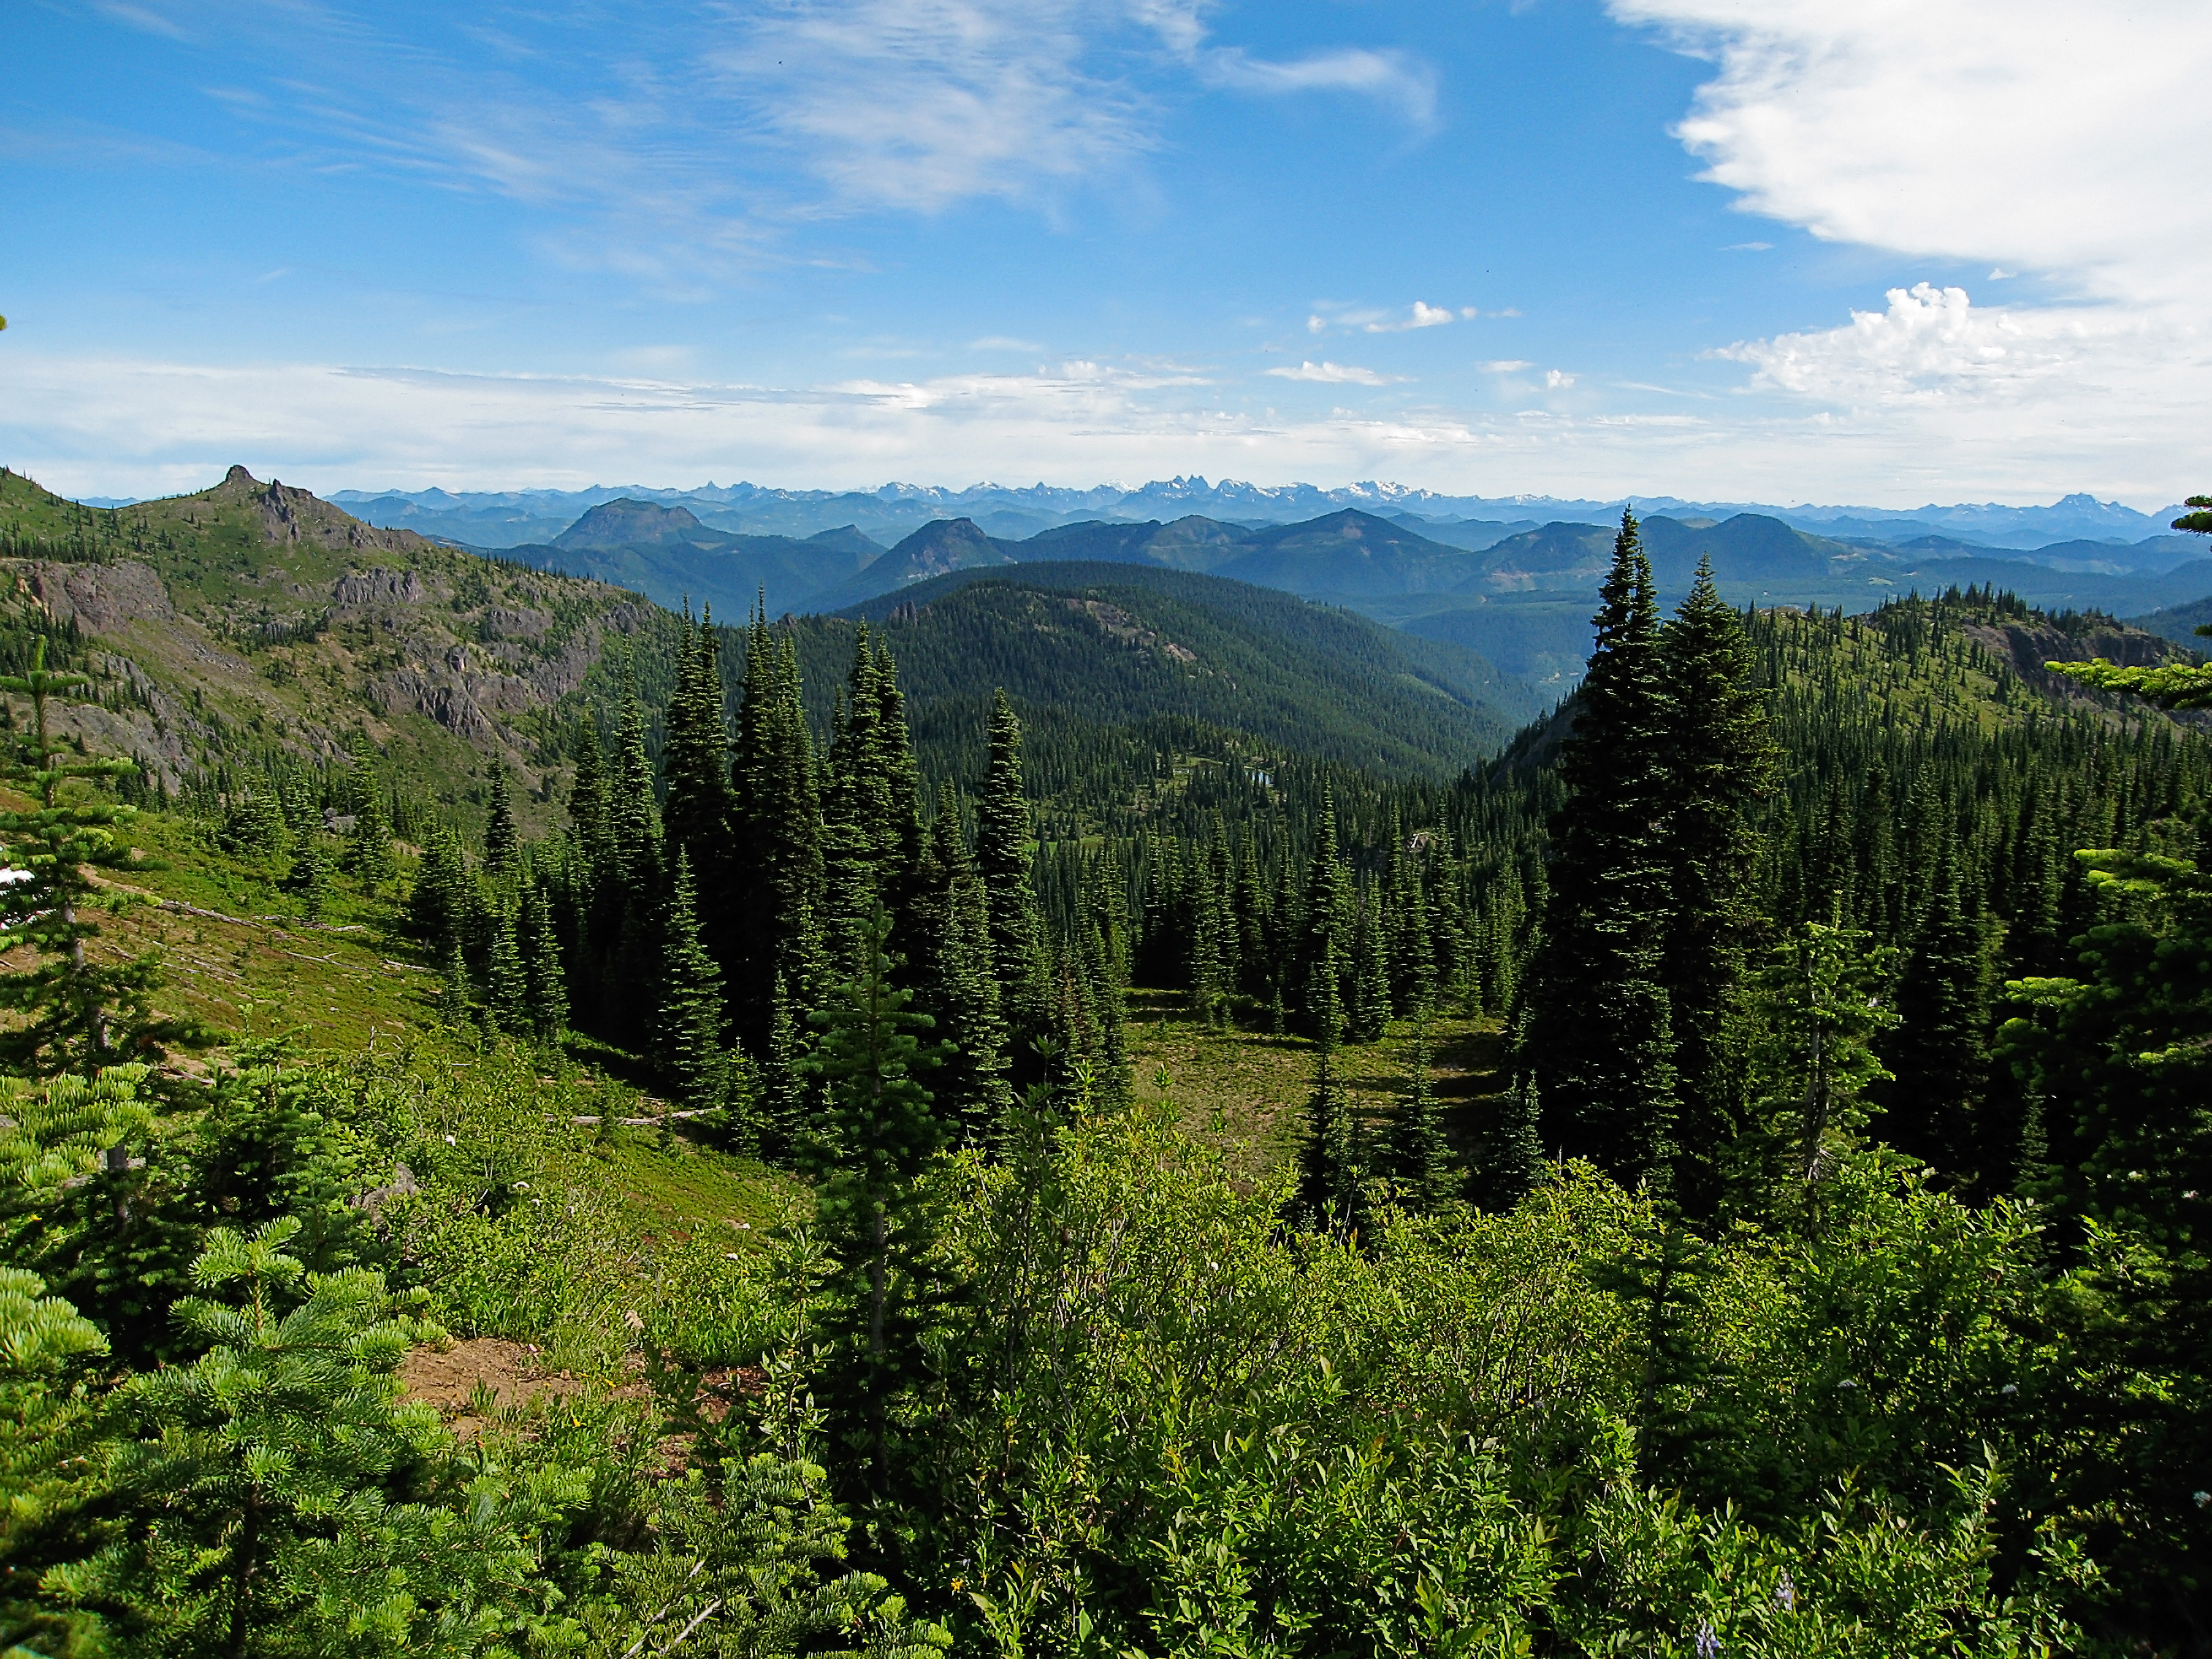 Mount Baker-Snoqualmie National Forest, Washington State. Photo taken on July 9, 2008.